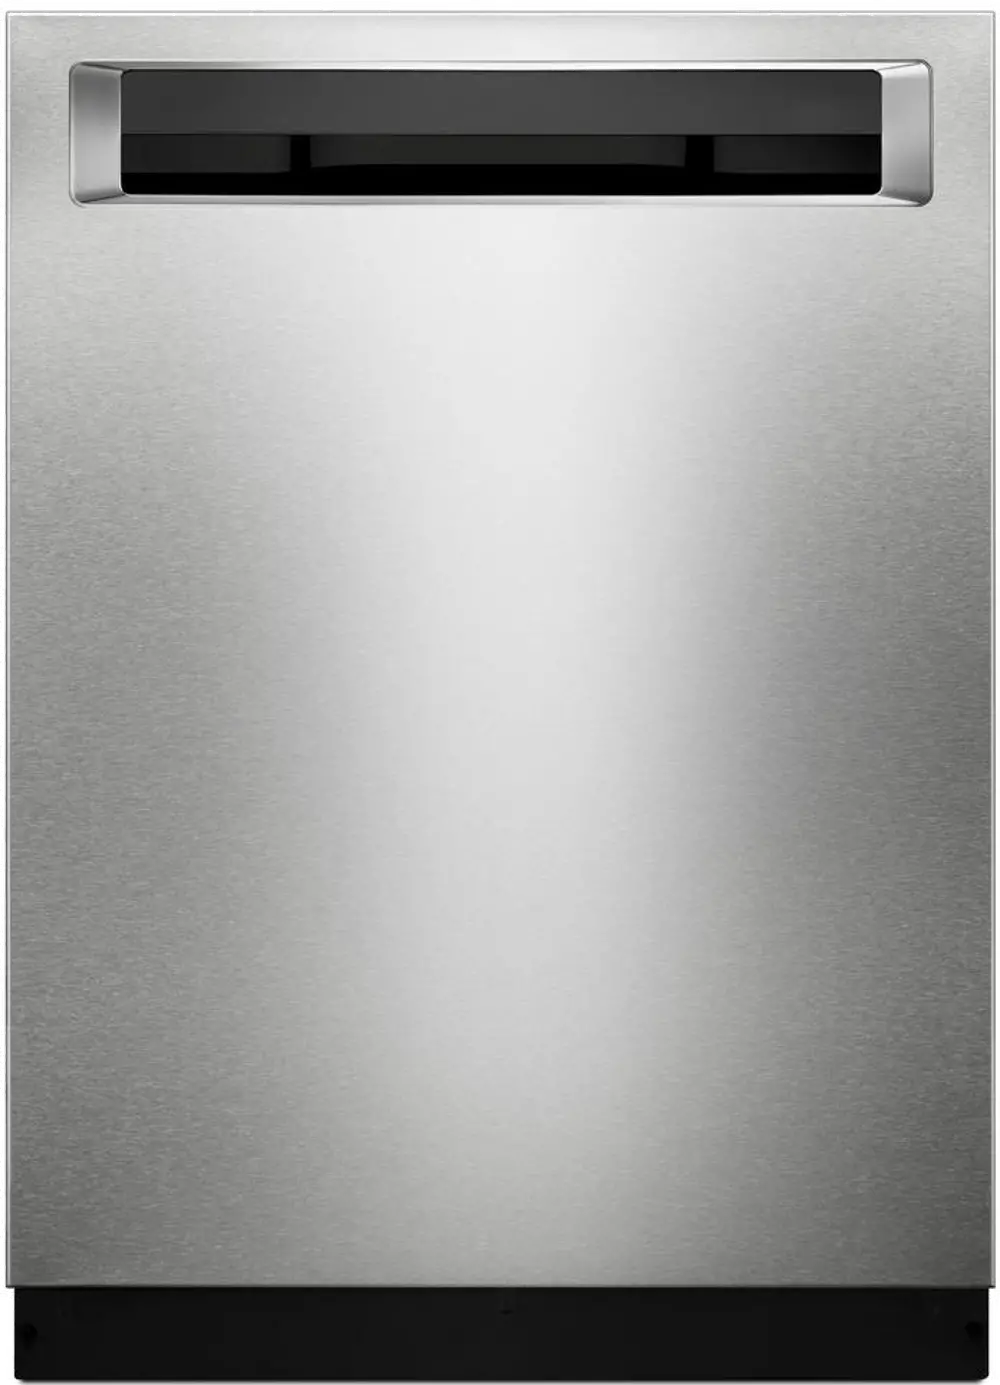 KDPE234GPS KitchenAid Dishwasher with Third Level Rack - Stainless Steel-1